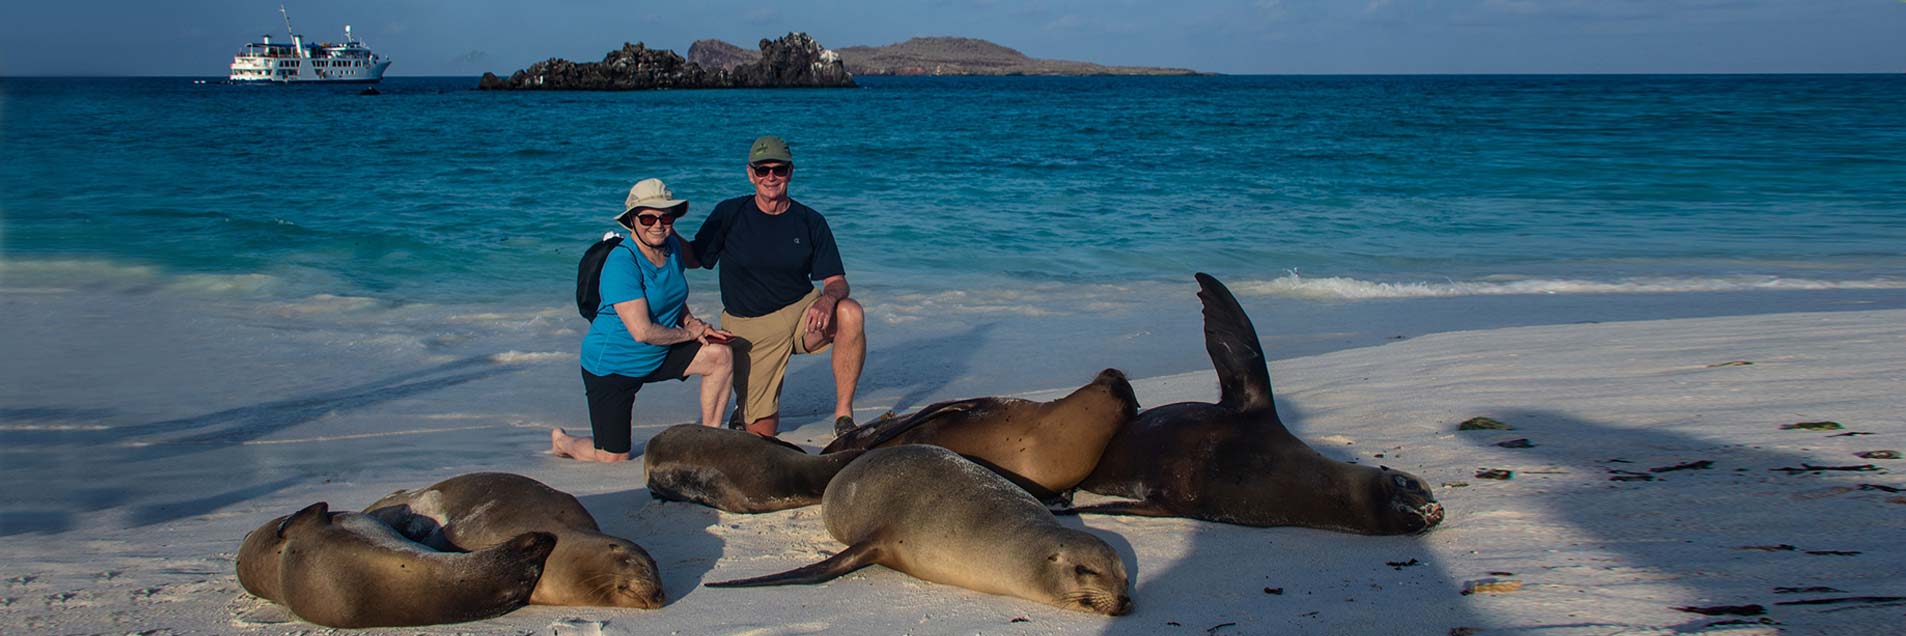 Galapagos Wildlife: Sea Lions